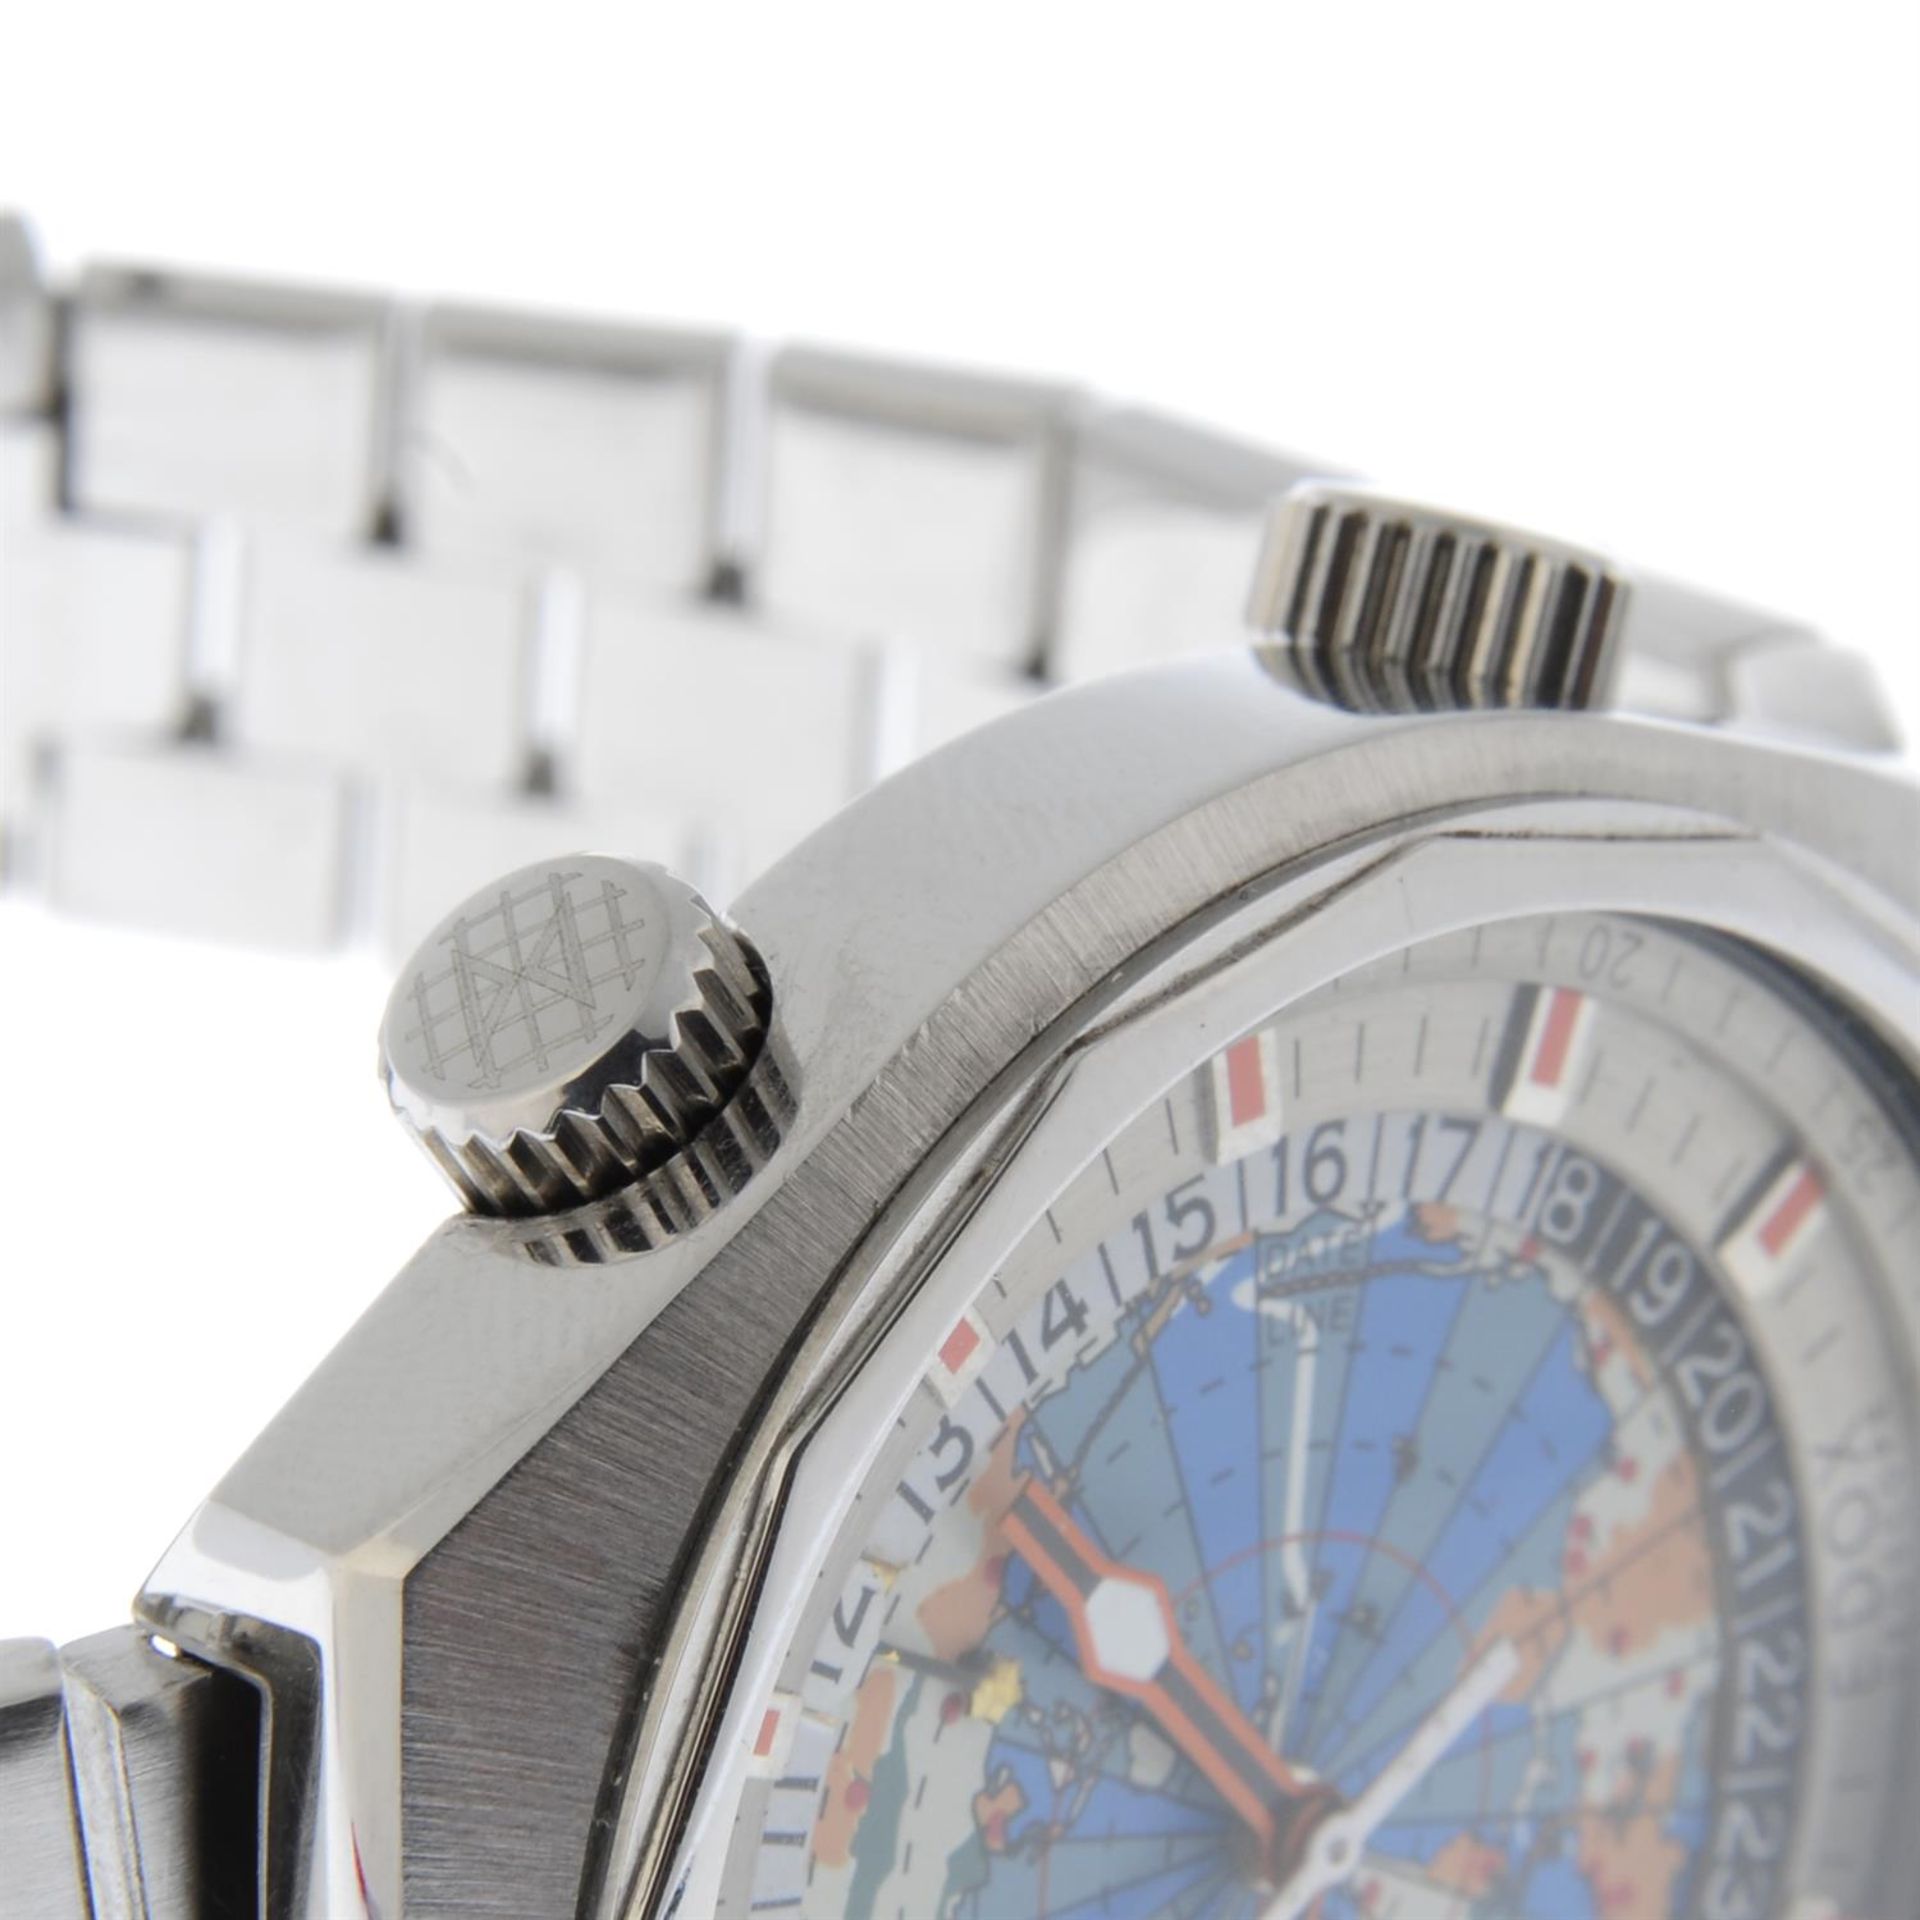 EDOX - a stainless steel Geoscope World Timer bracelet watch, 42mm. - Bild 4 aus 6